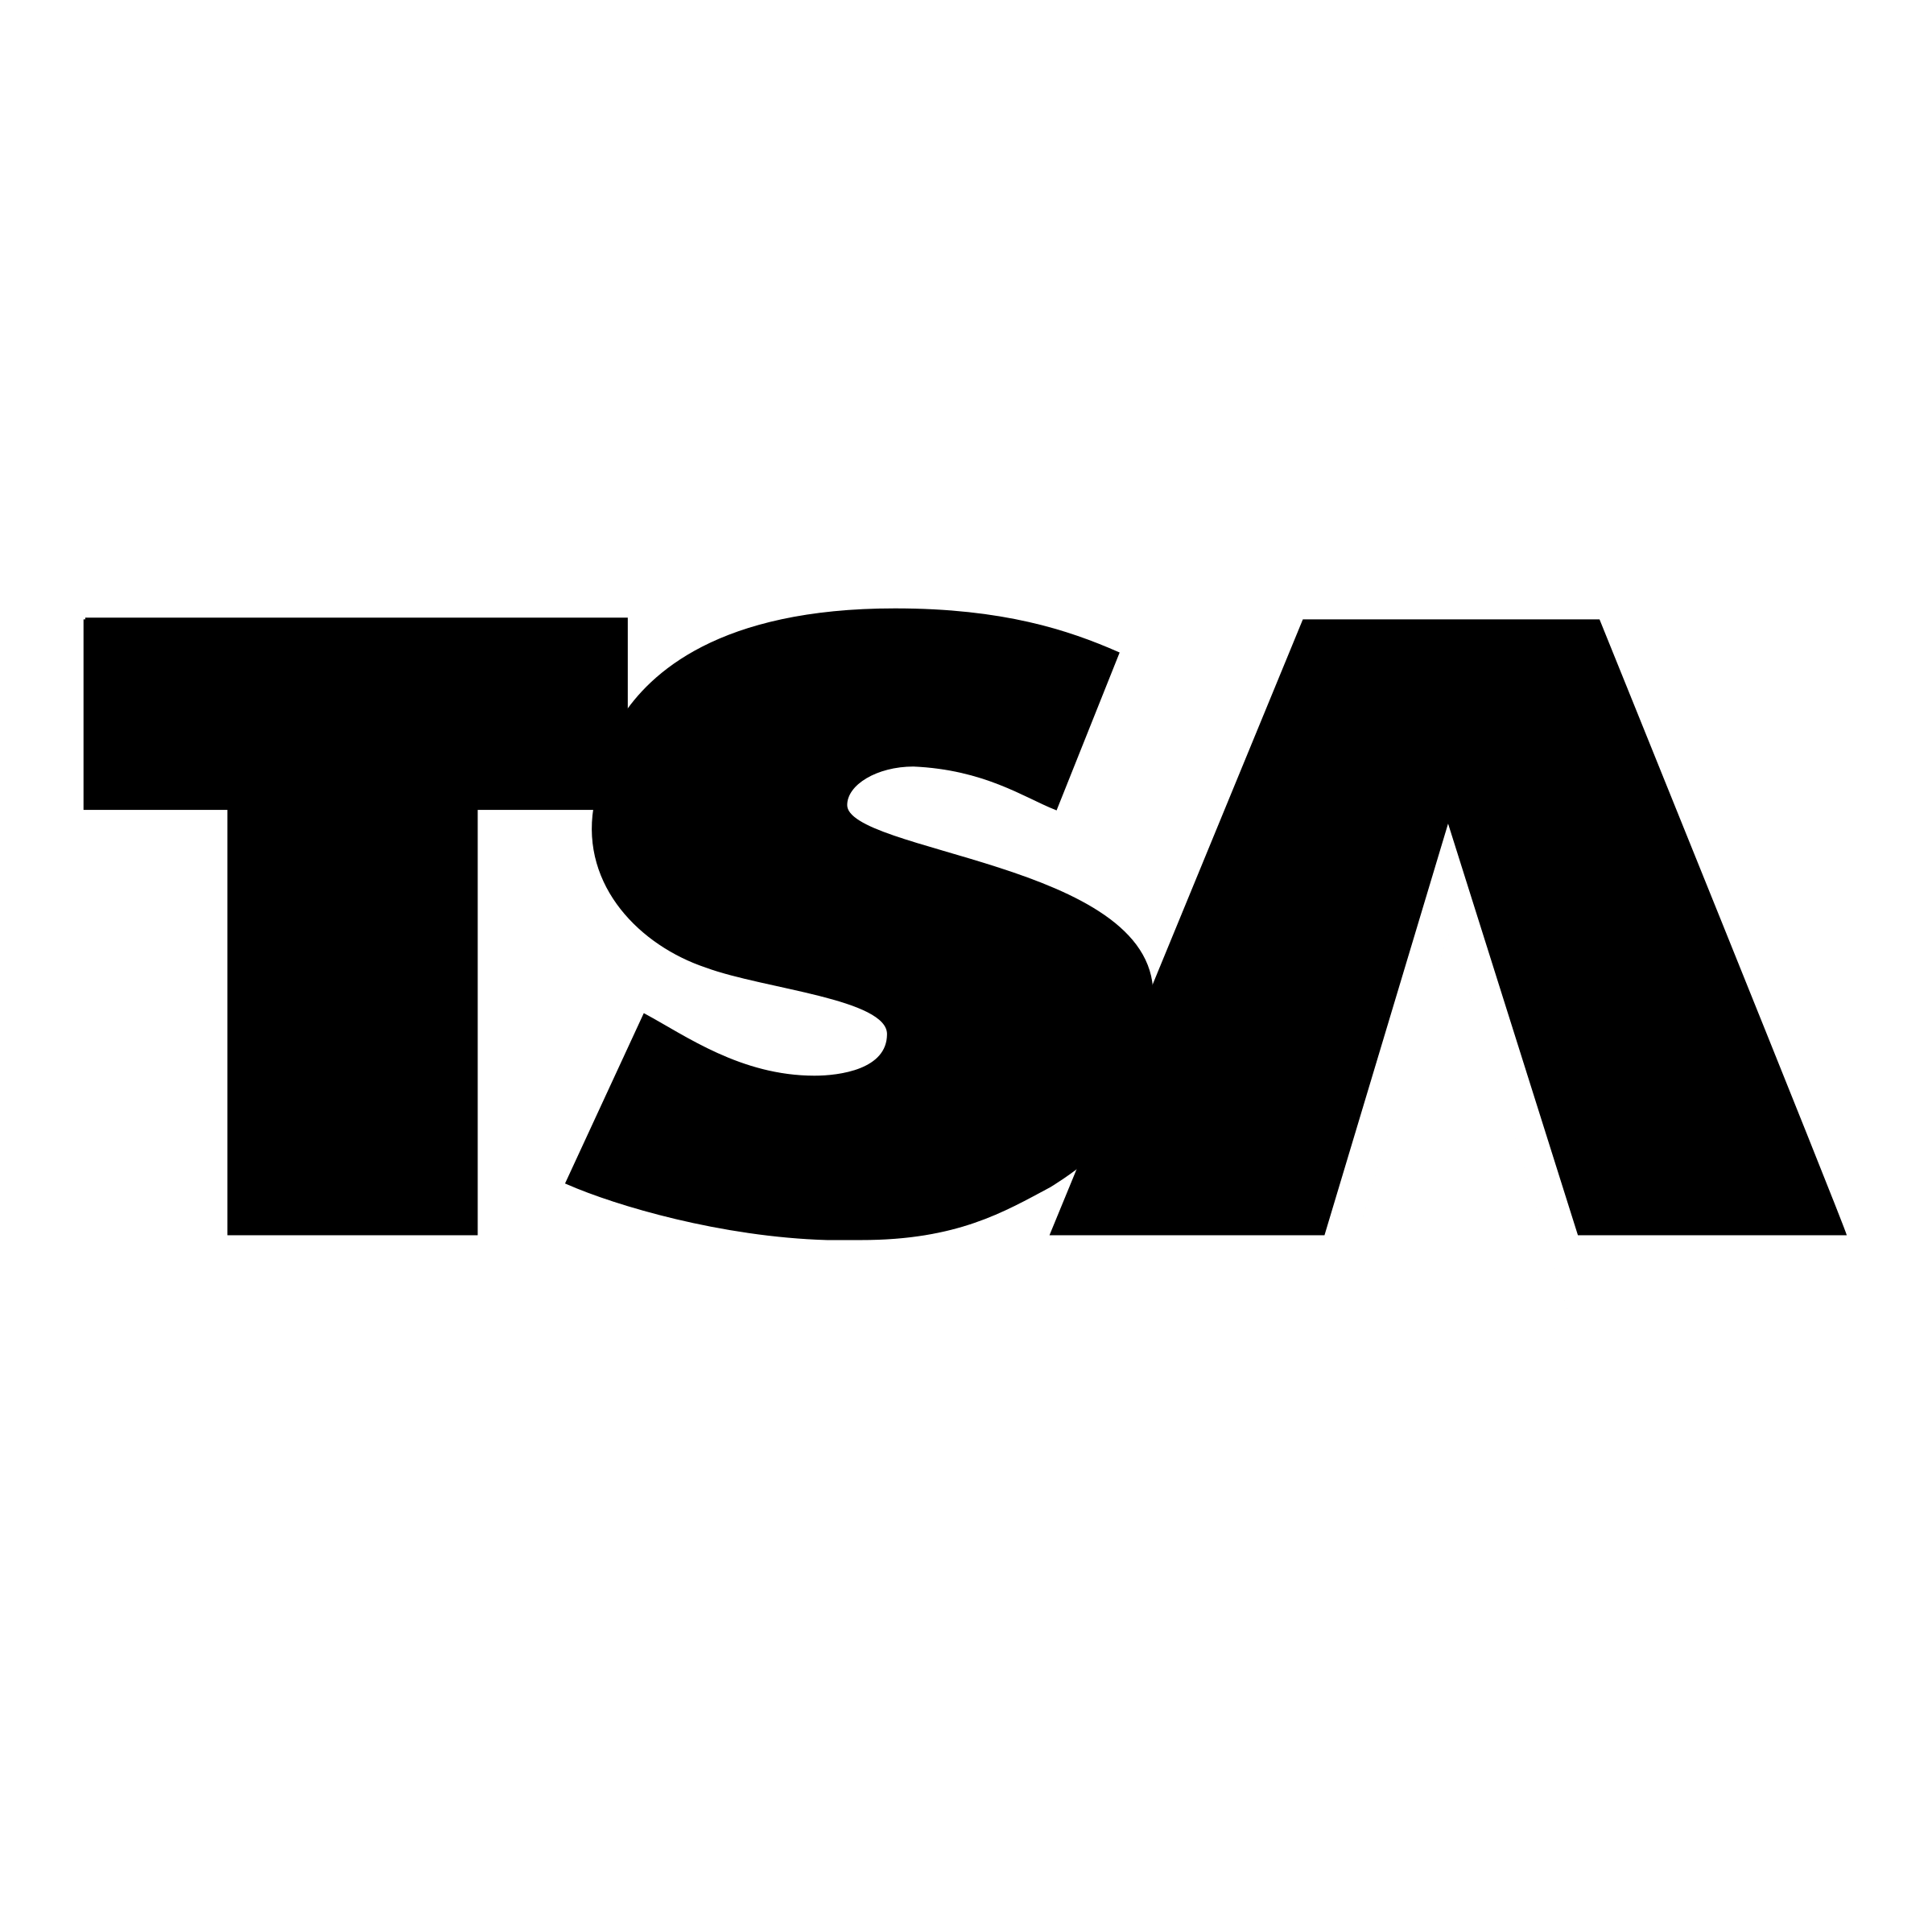 Black and White TSA Logo - TSA Logo PNG Transparent & SVG Vector - Freebie Supply